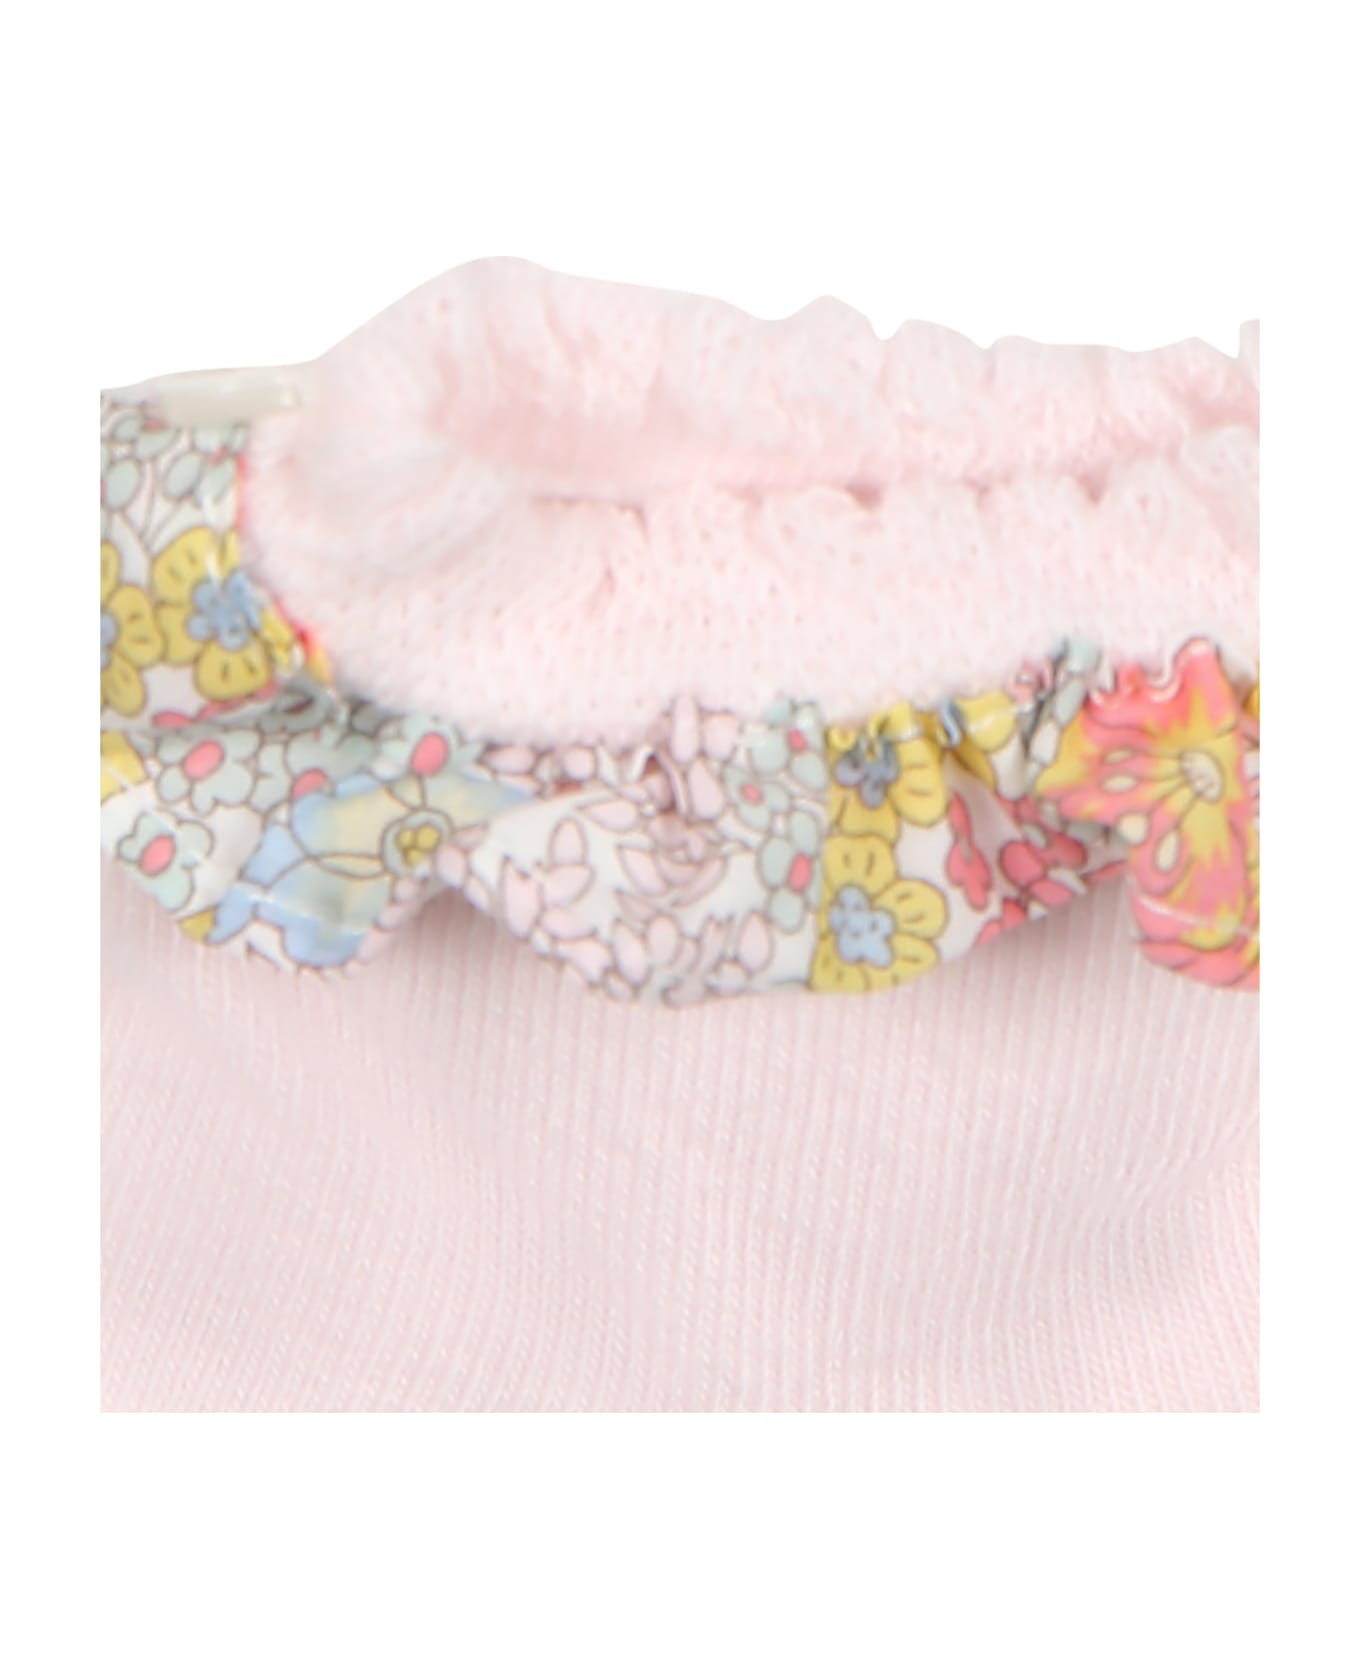 Tartine et Chocolat Pink Socks For Baby Girls With Liberty Fabric - Pink シューズ